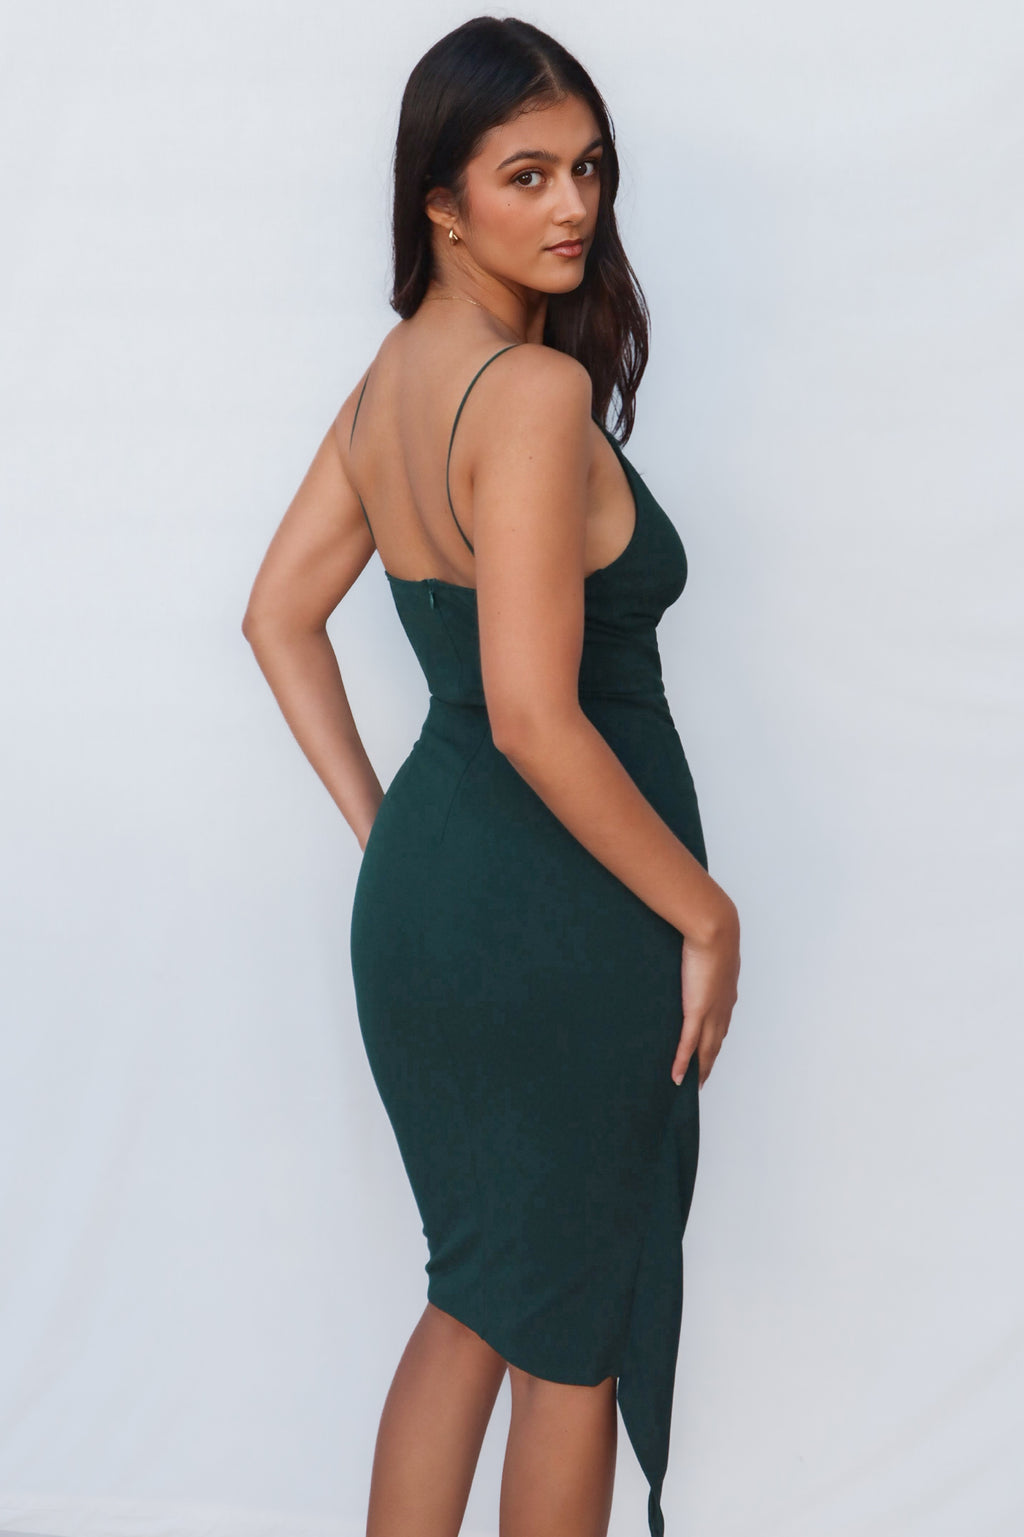 Kylie Bodycon Dress - Emerald Green